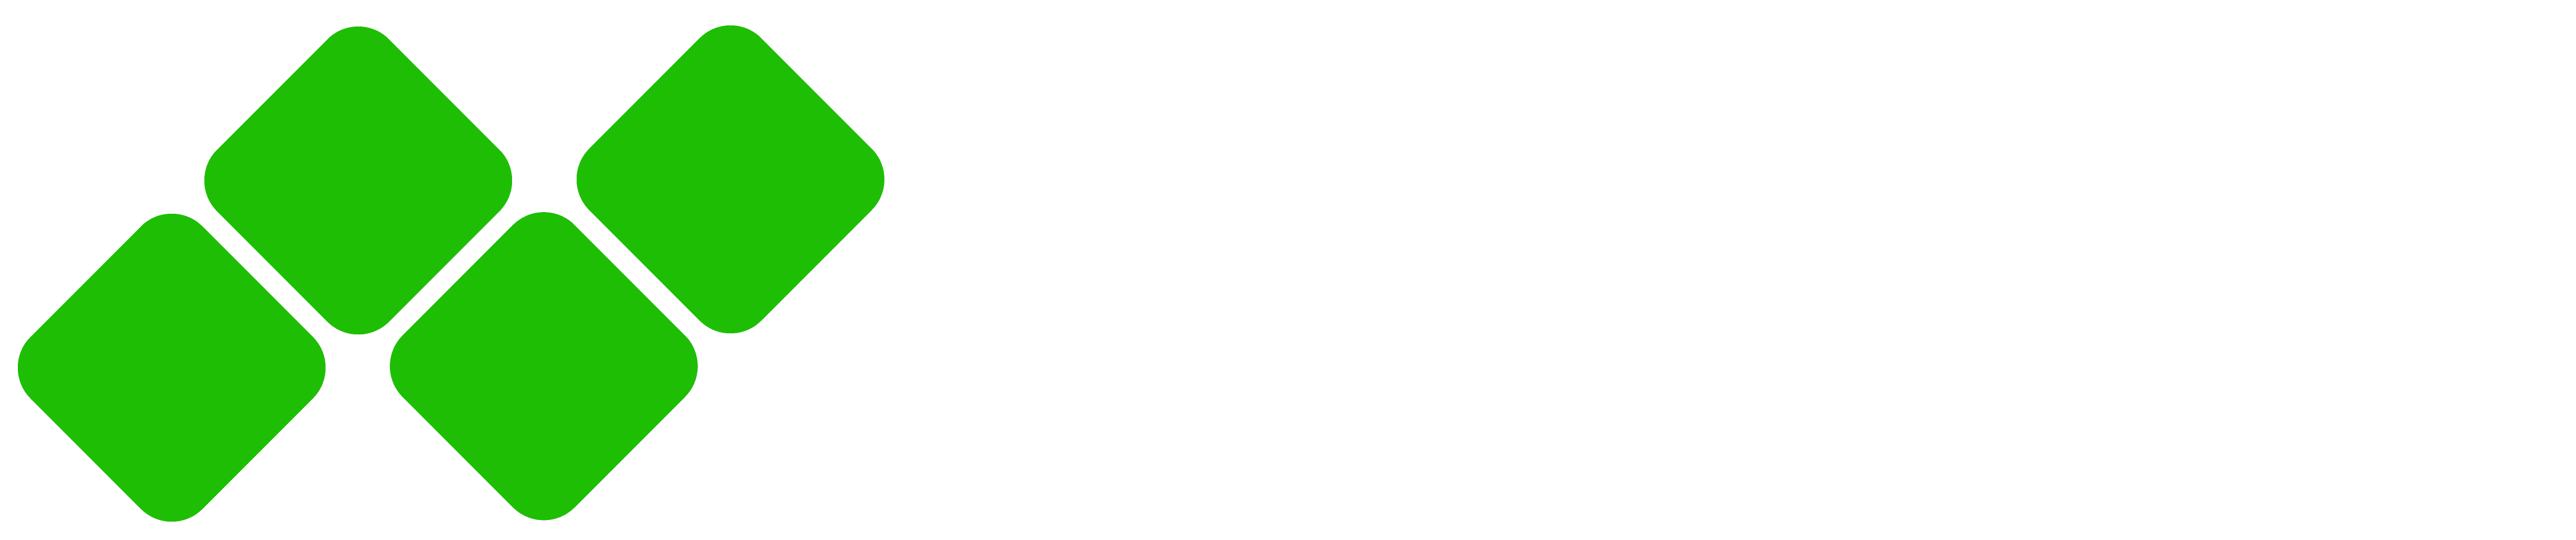 TradrLab